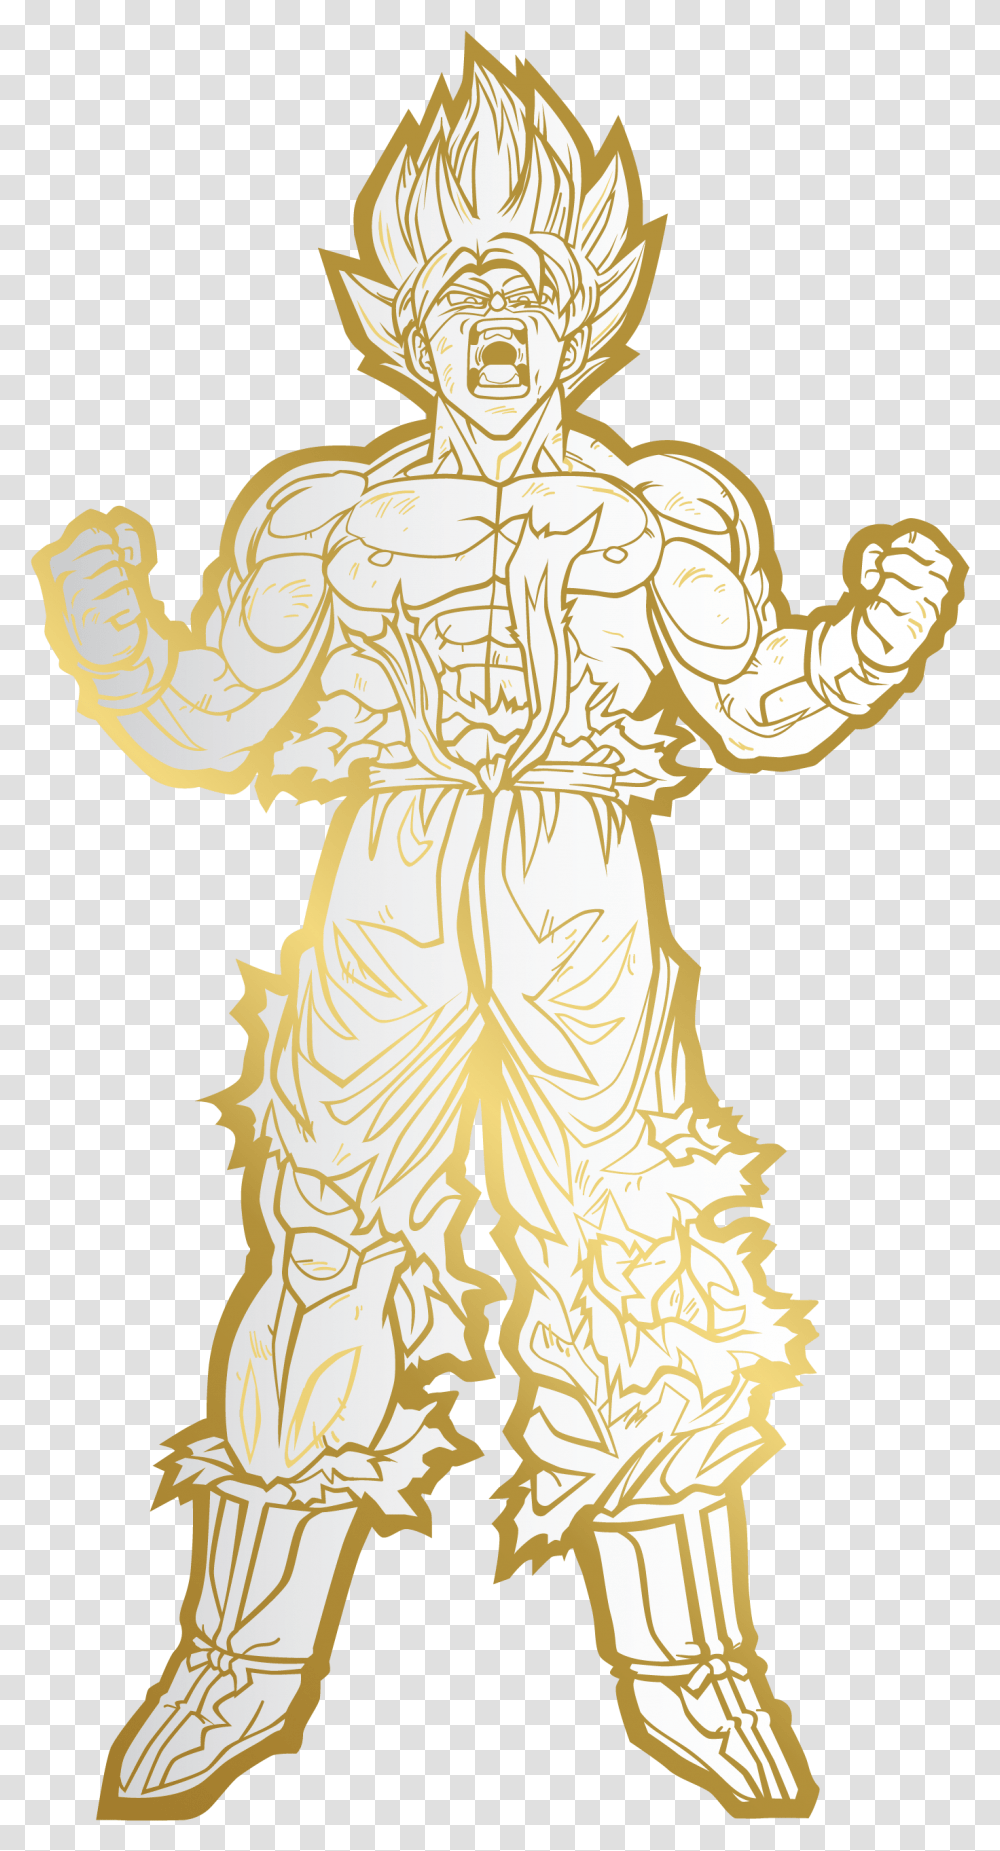 Super Saiyan Goku Drawing Of Dragon Ball Super Characters, Person, Human, Astronaut, Performer Transparent Png